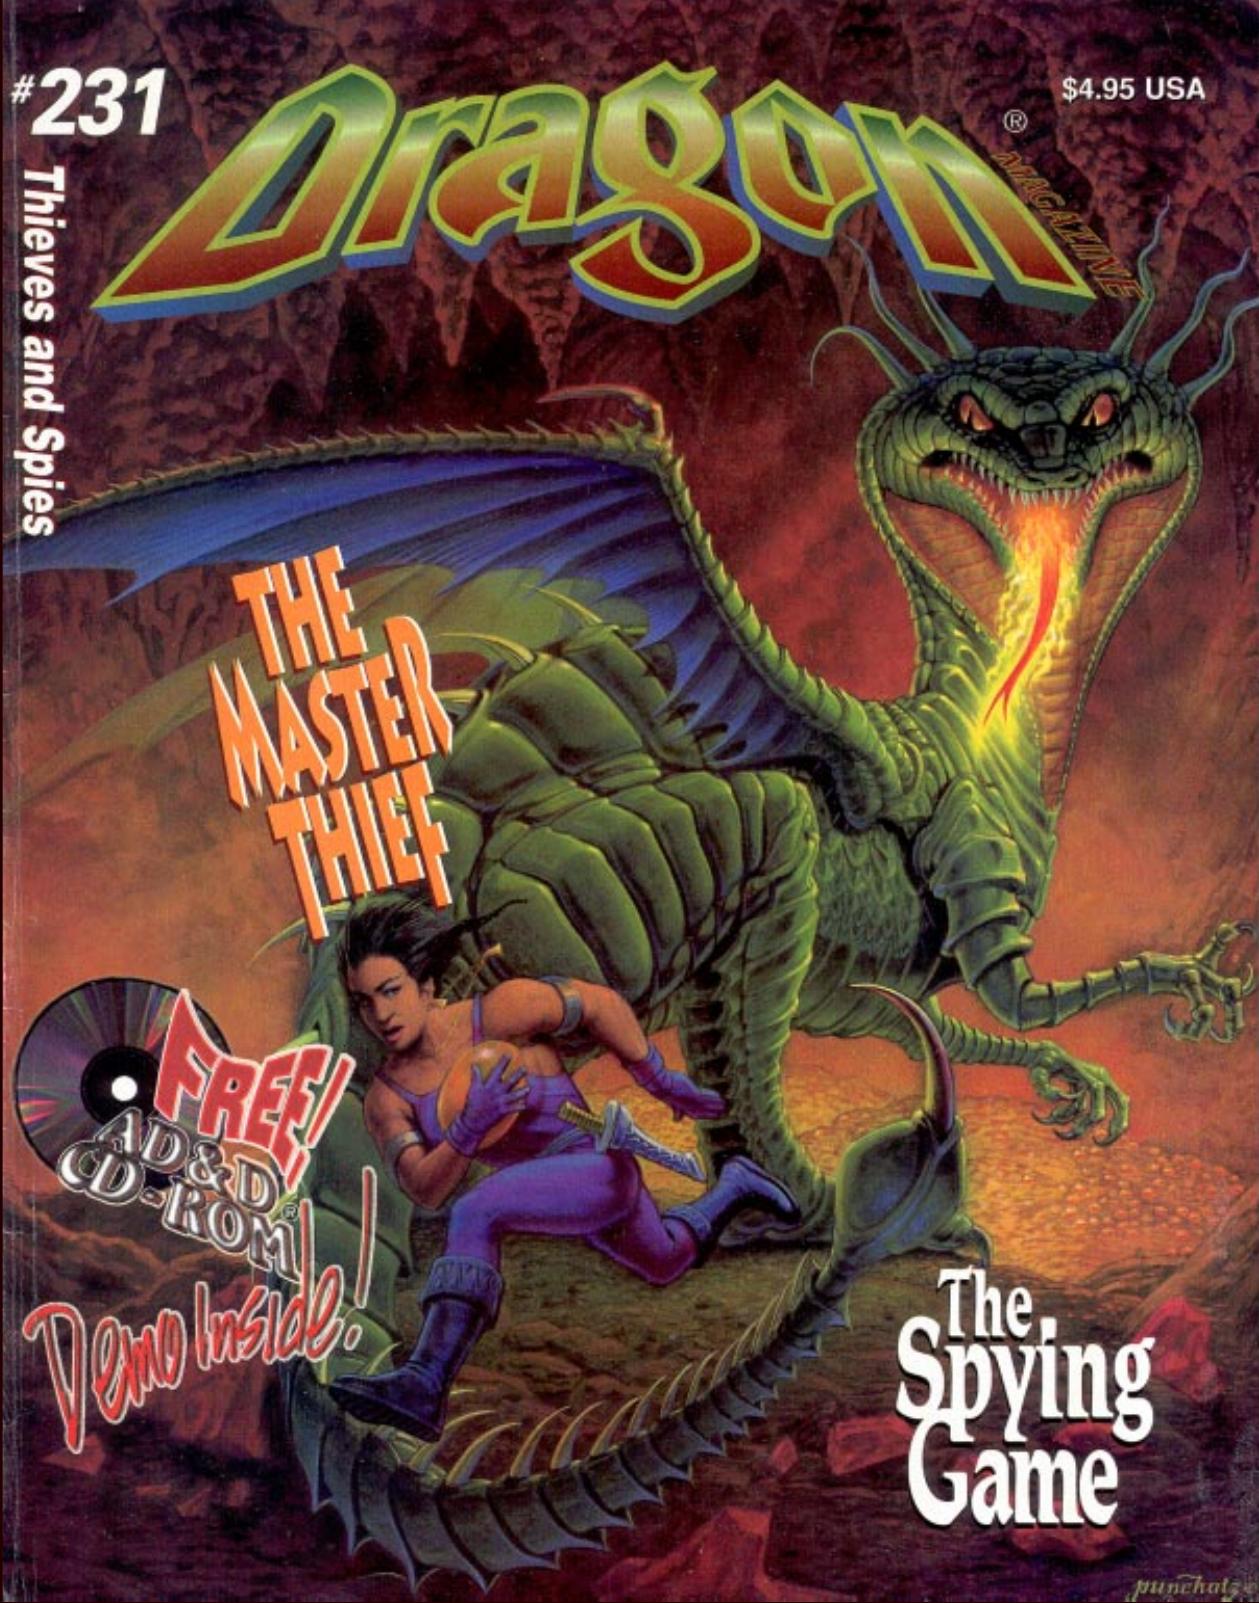 Dragon Magazine #231